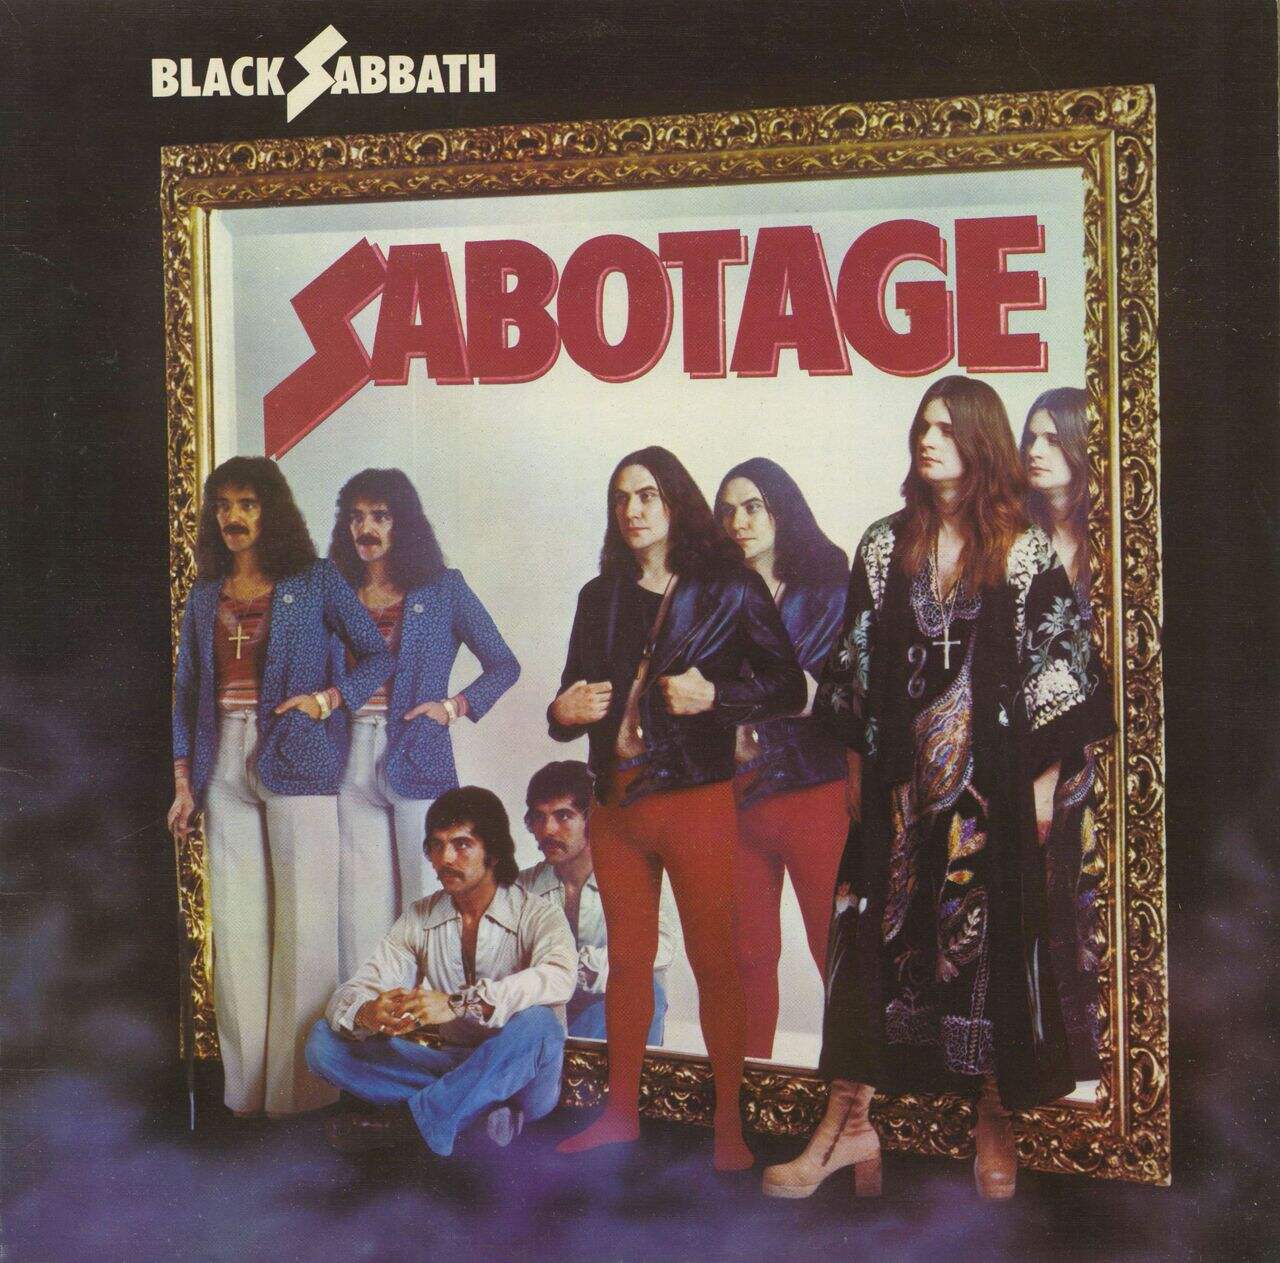 Black Sabbath Sabotage - 11⁄2 UK Vinyl LP